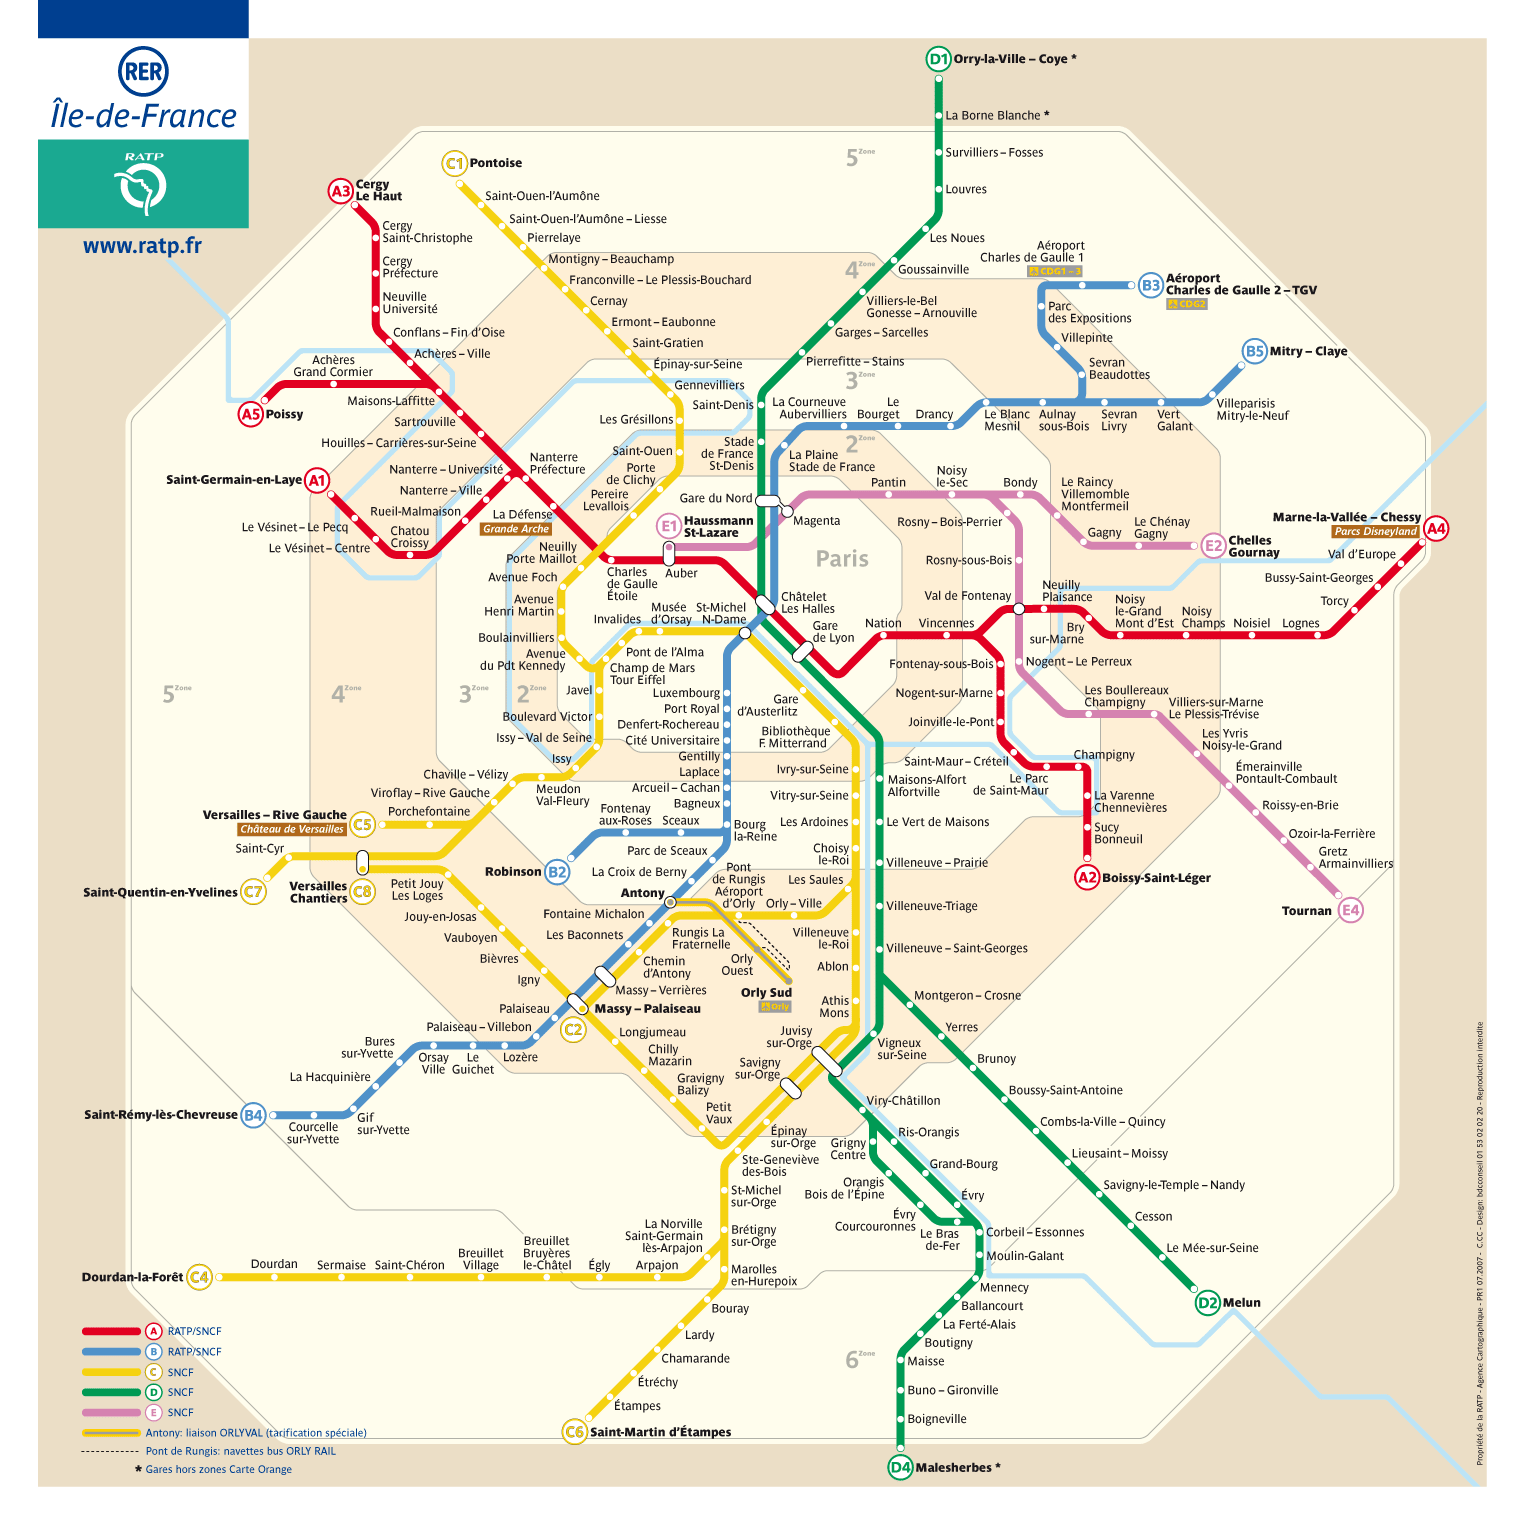 Public transports in Paris: metro, RER, bus. - practical guide to Paris